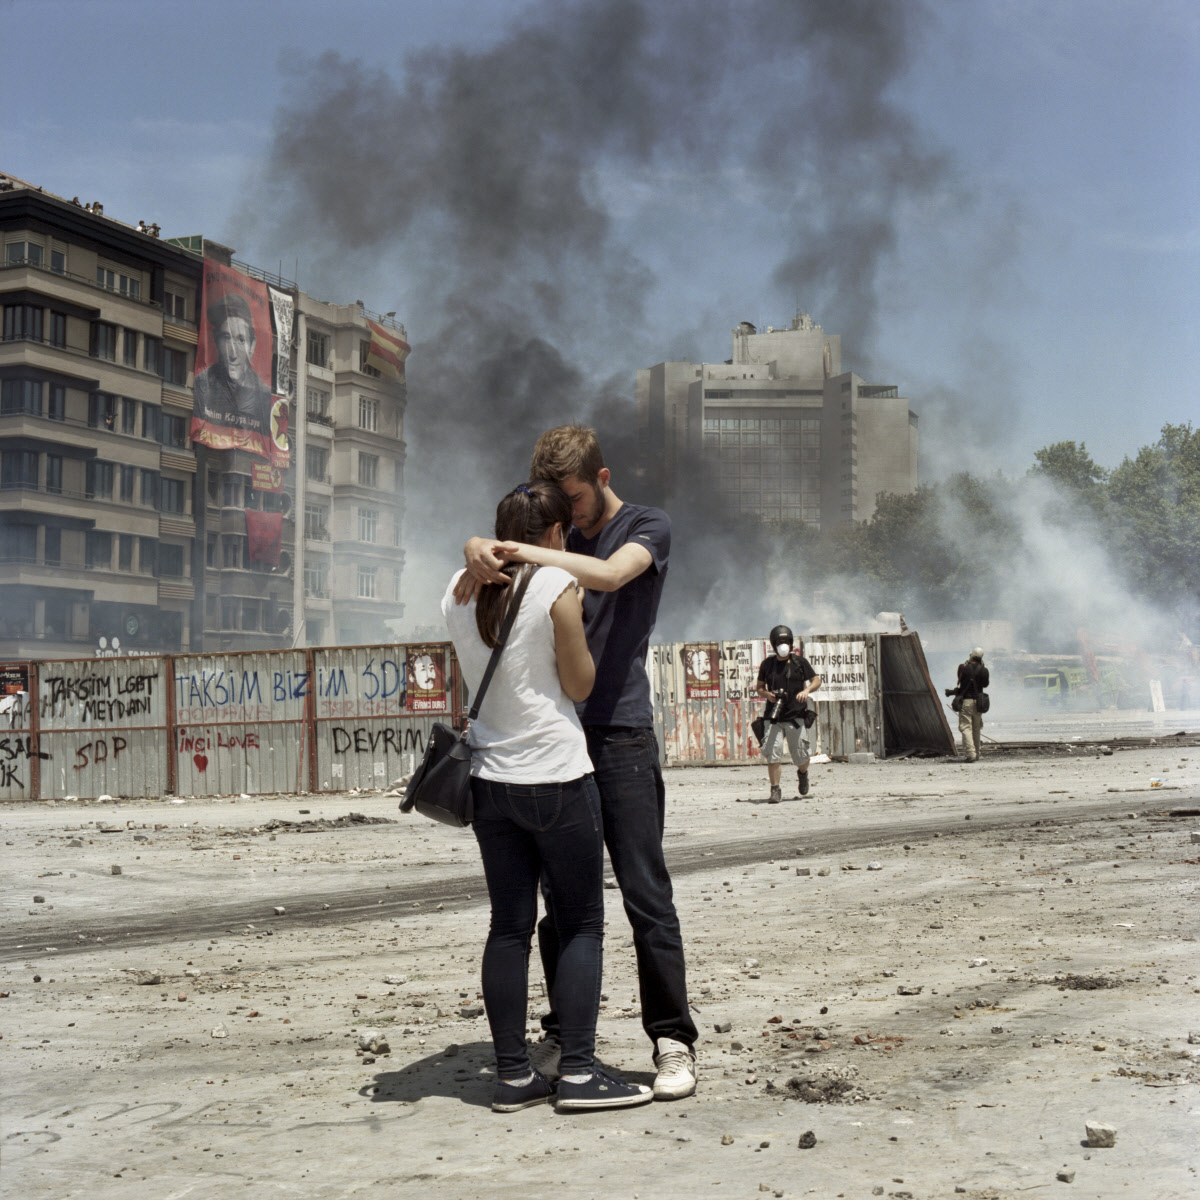 The Battle for Taksim